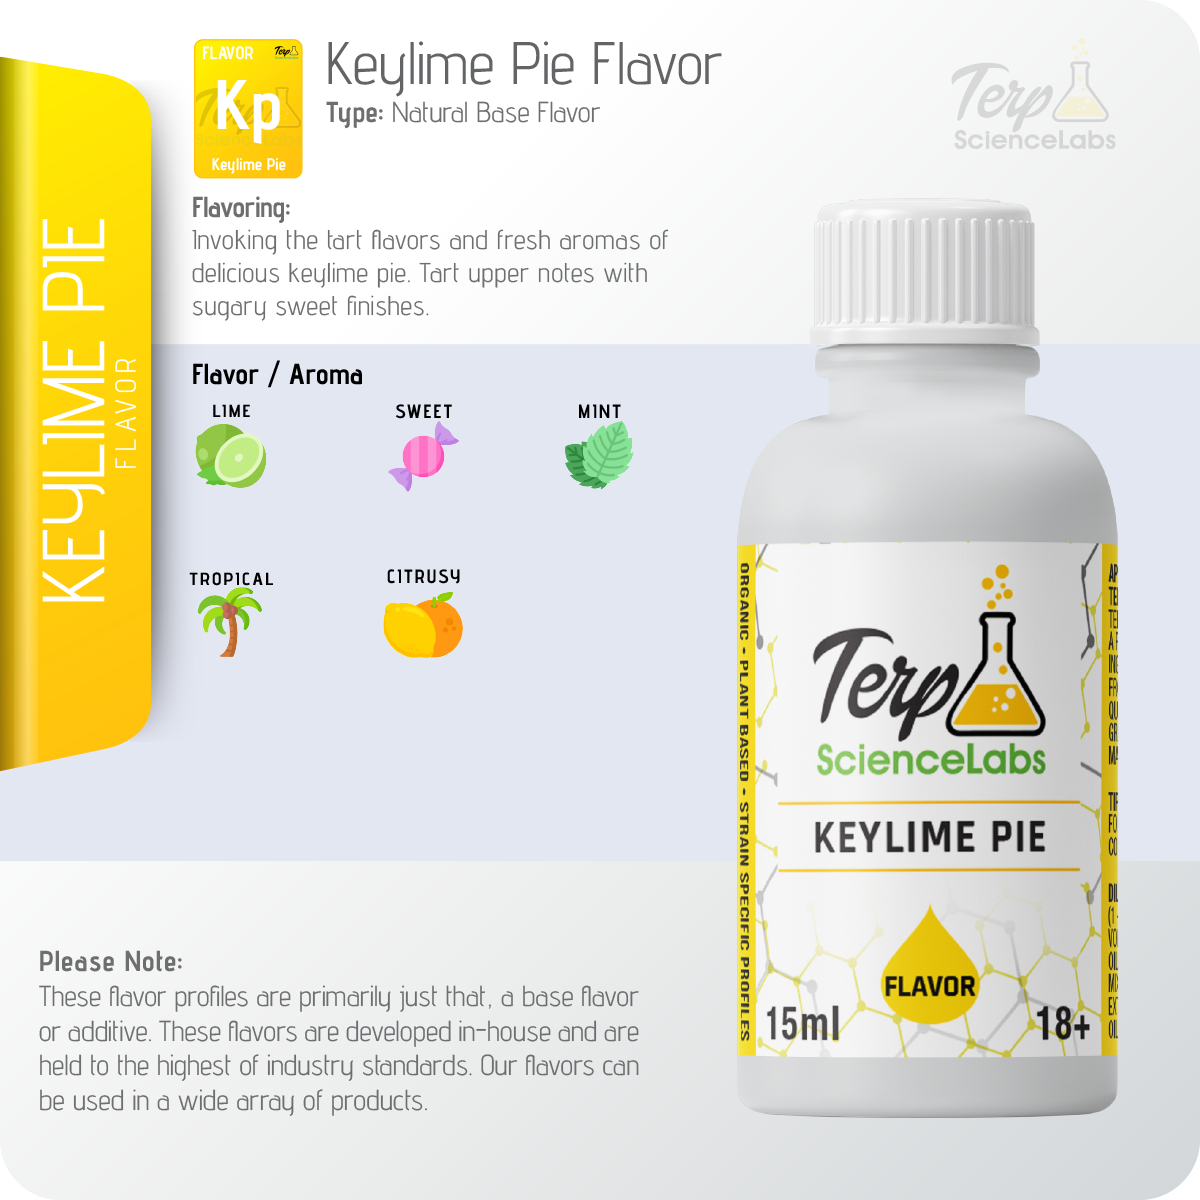 Keylime Pie Flavor Profile